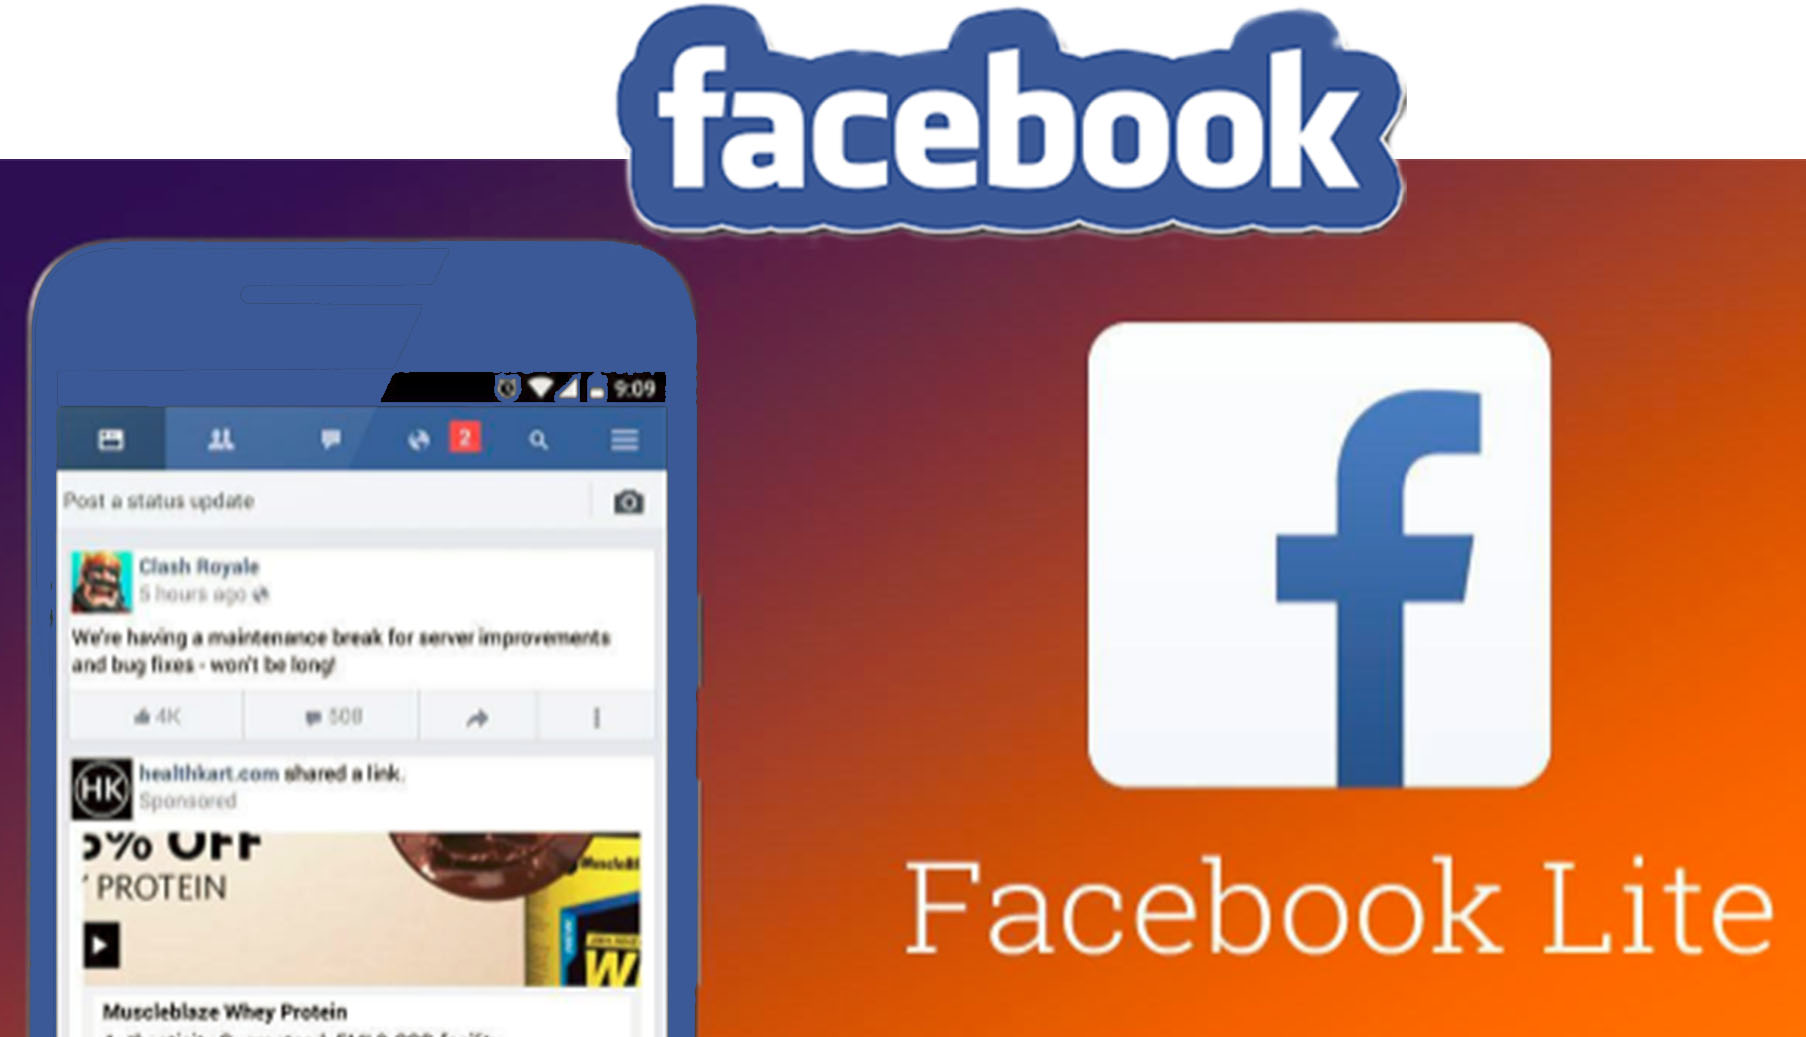 Facebook Lite Log In Sign In Facebook Lite Login Free Mode M